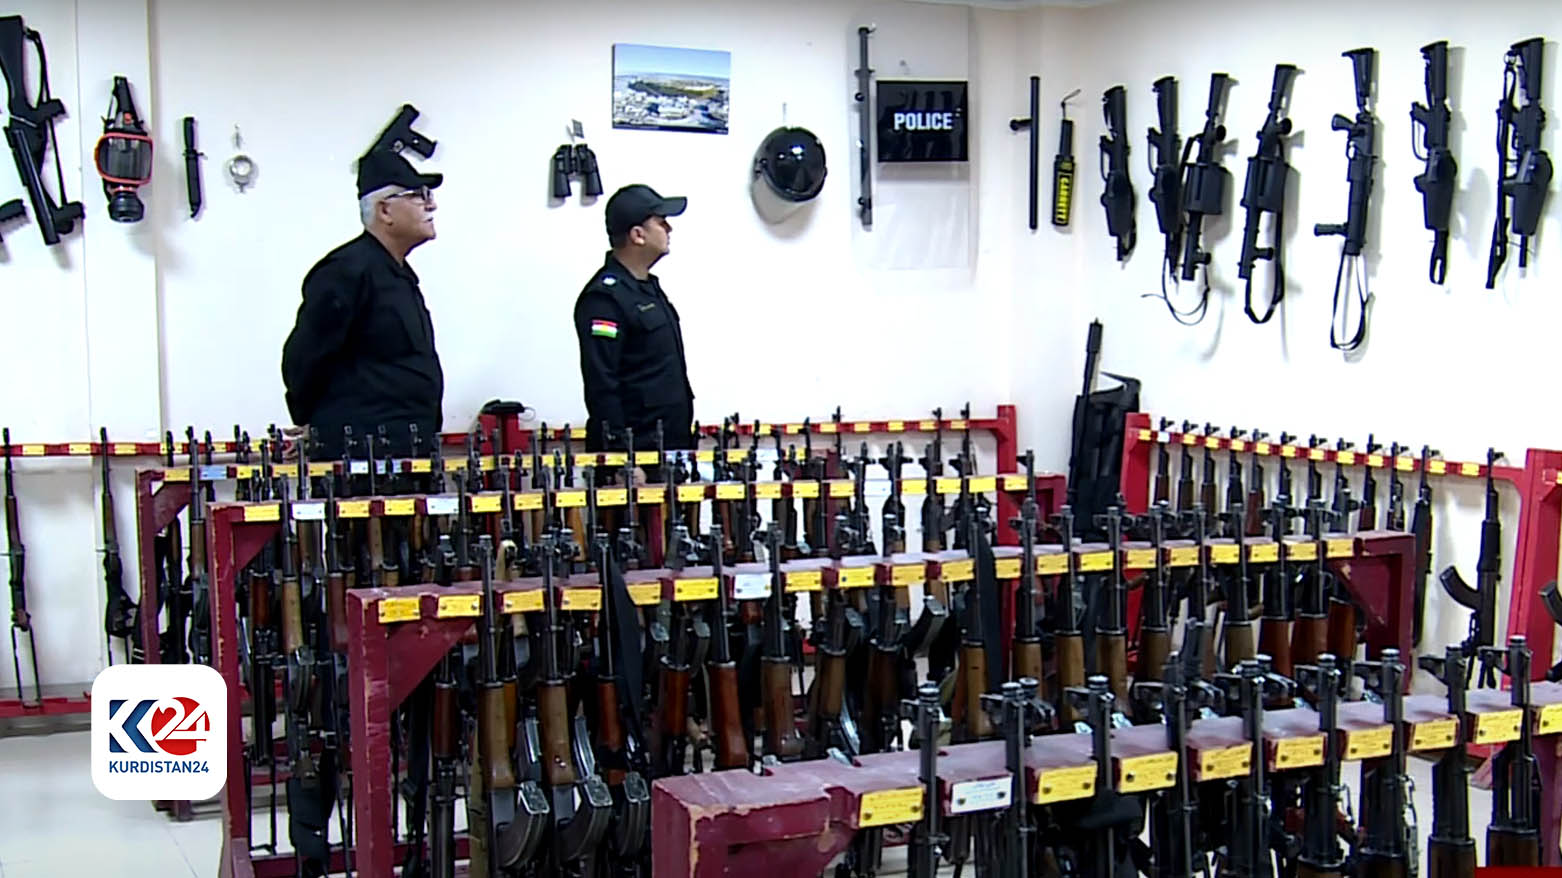 Registering unlicensed weapons in one of the Kurdistan Region police stations. (Photo: Kurdistan24)